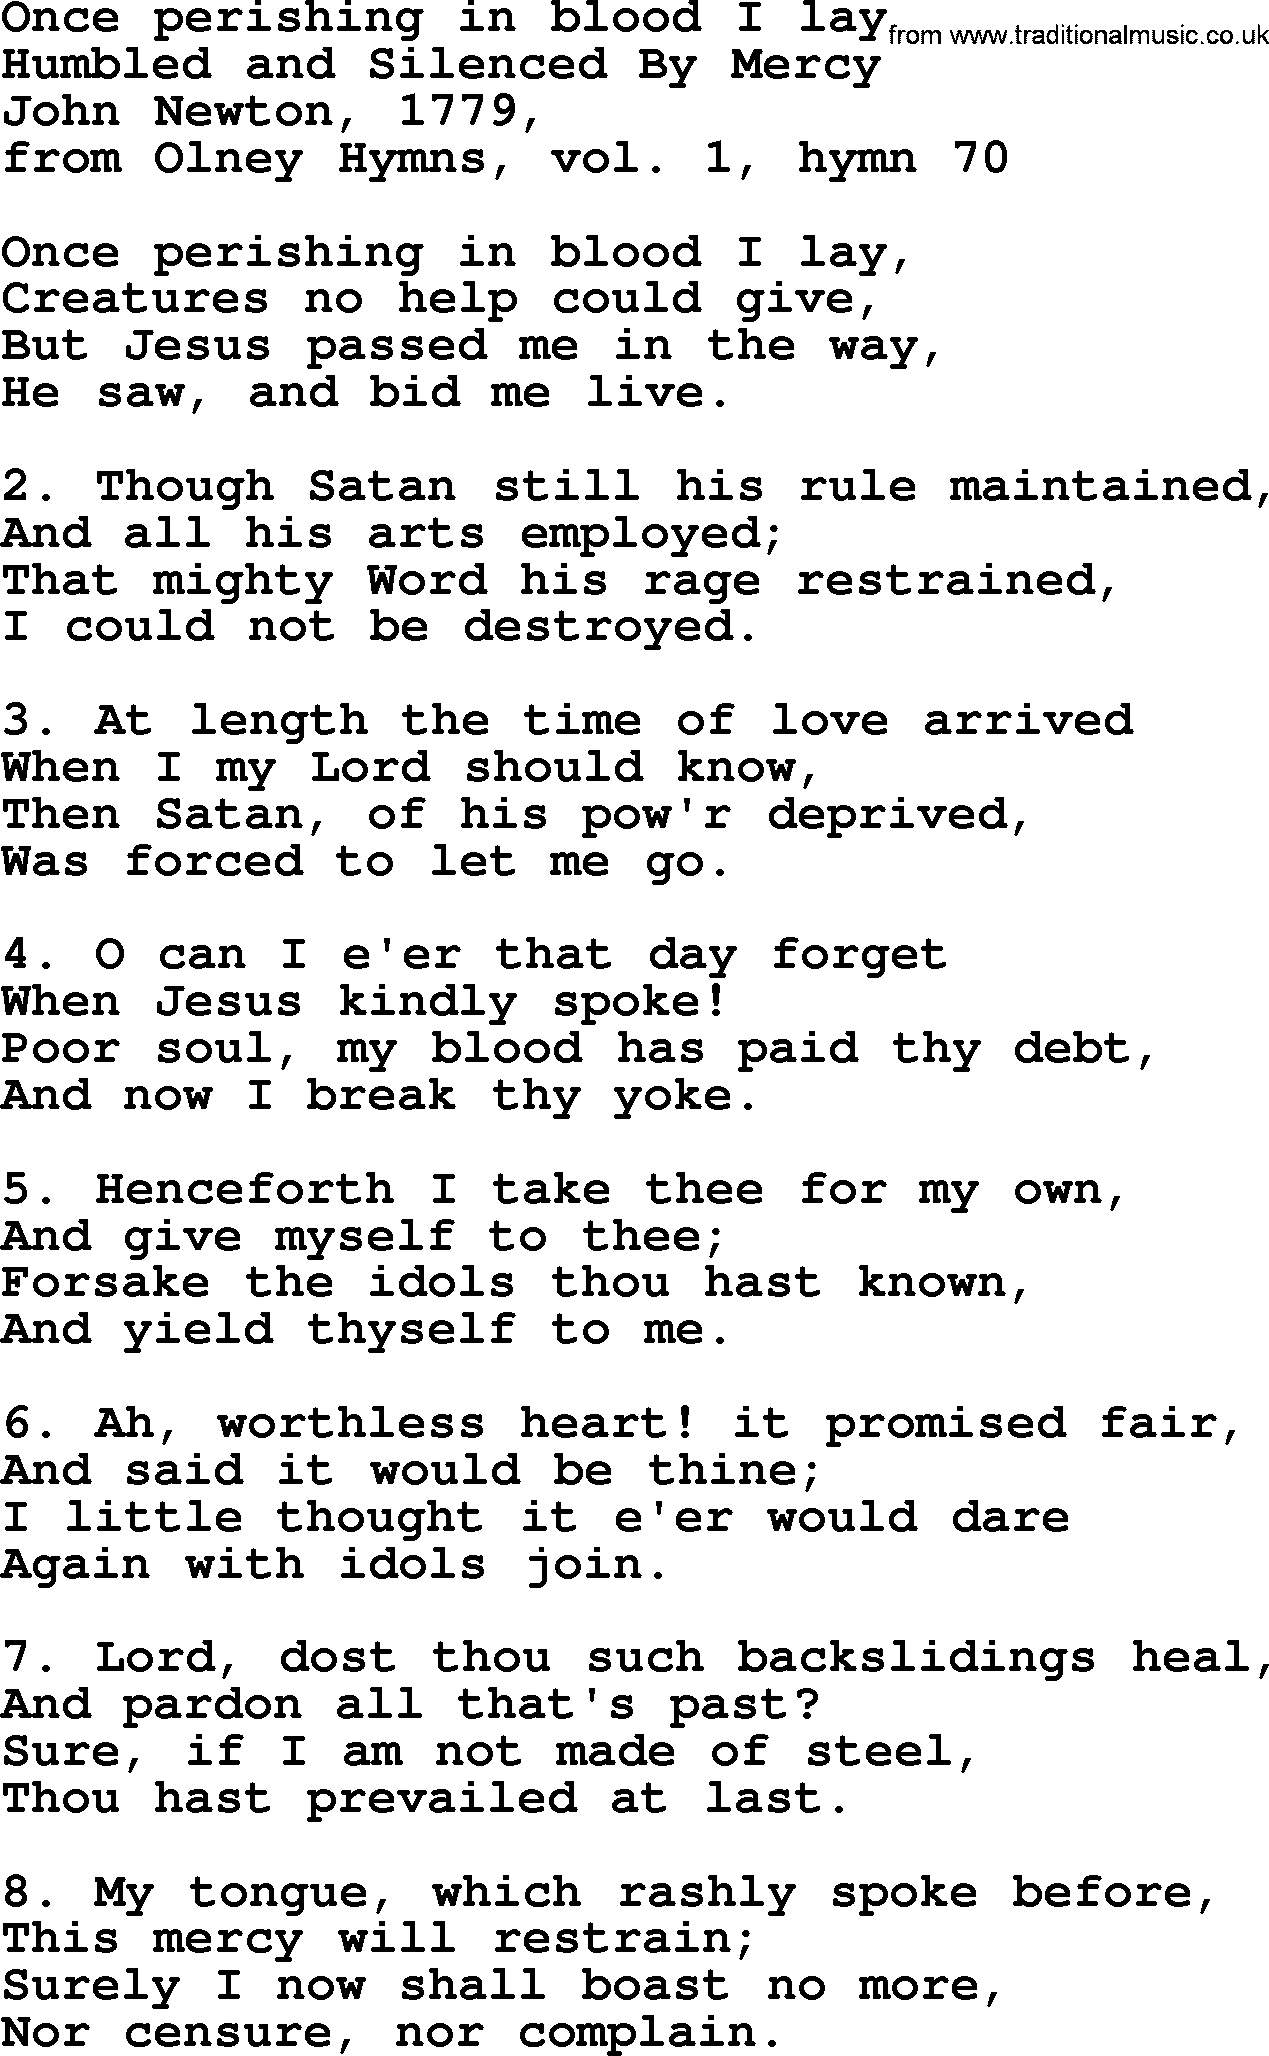 John Newton hymn: Once Perishing In Blood I Lay, lyrics